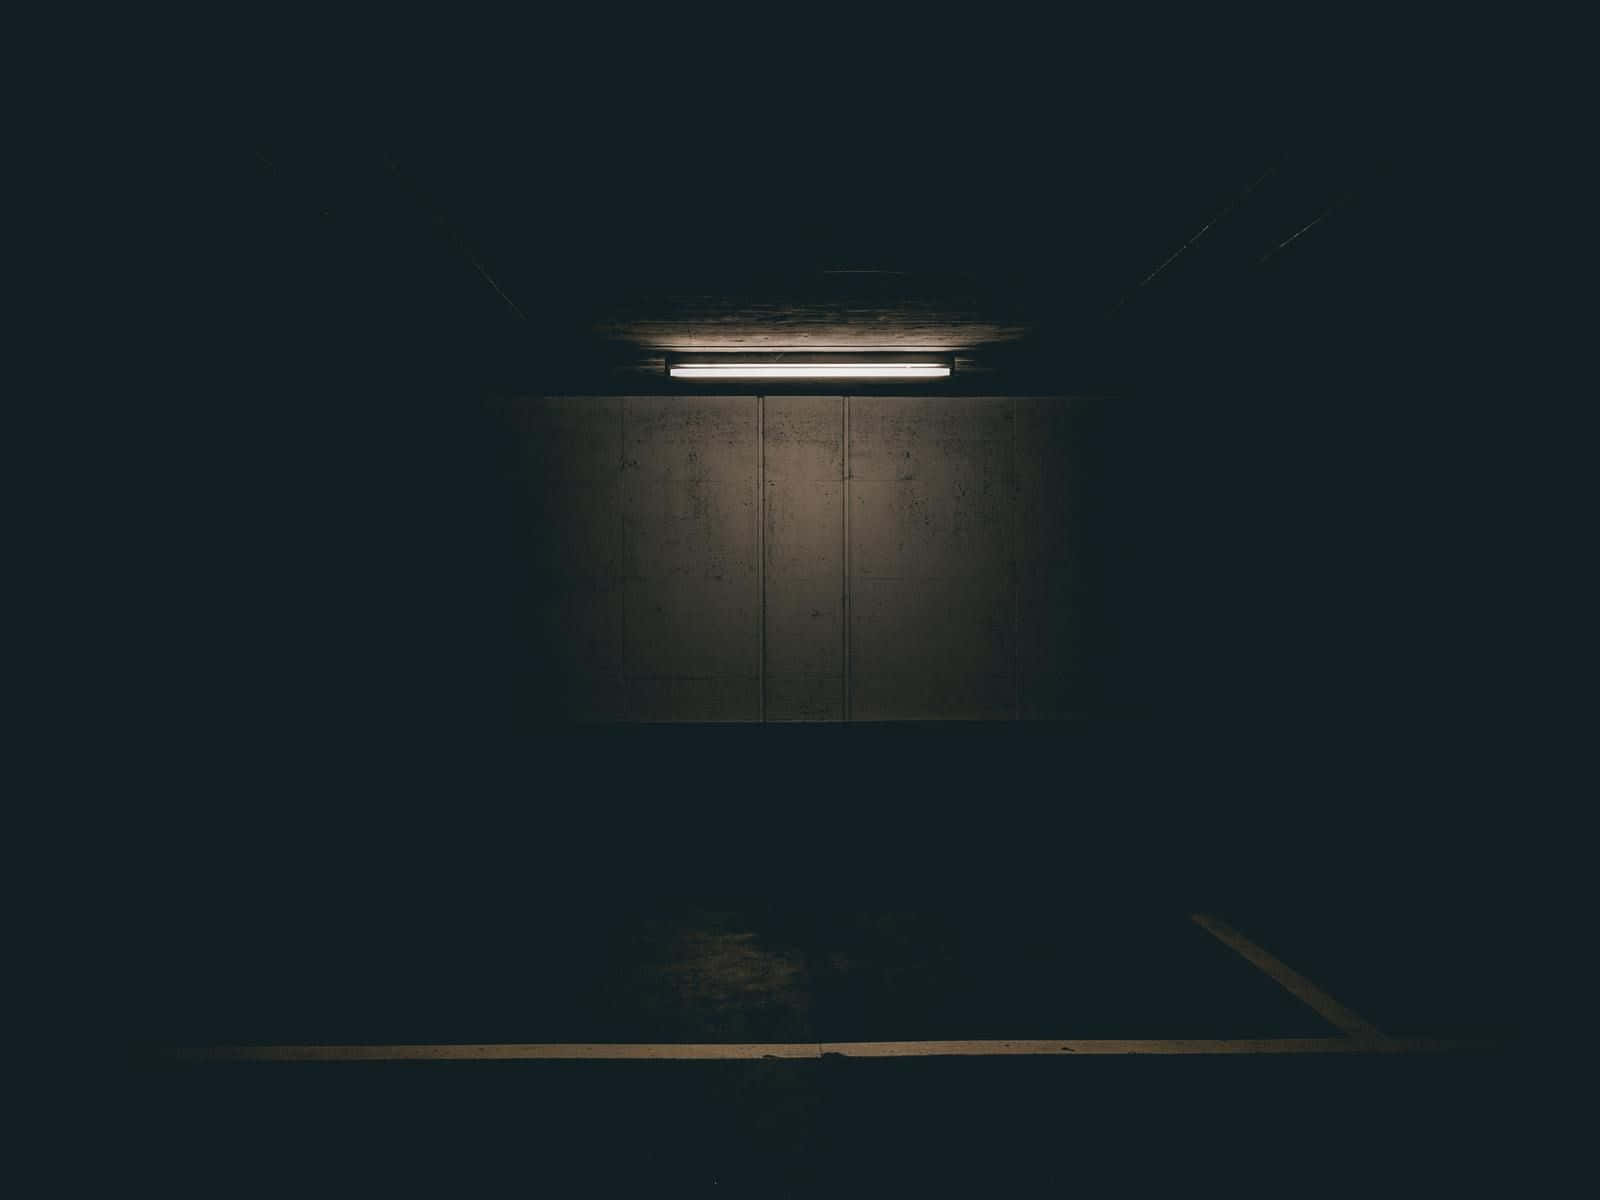 Enmørk Parkeringsgarage Med Lys, Der Skinner På Det.